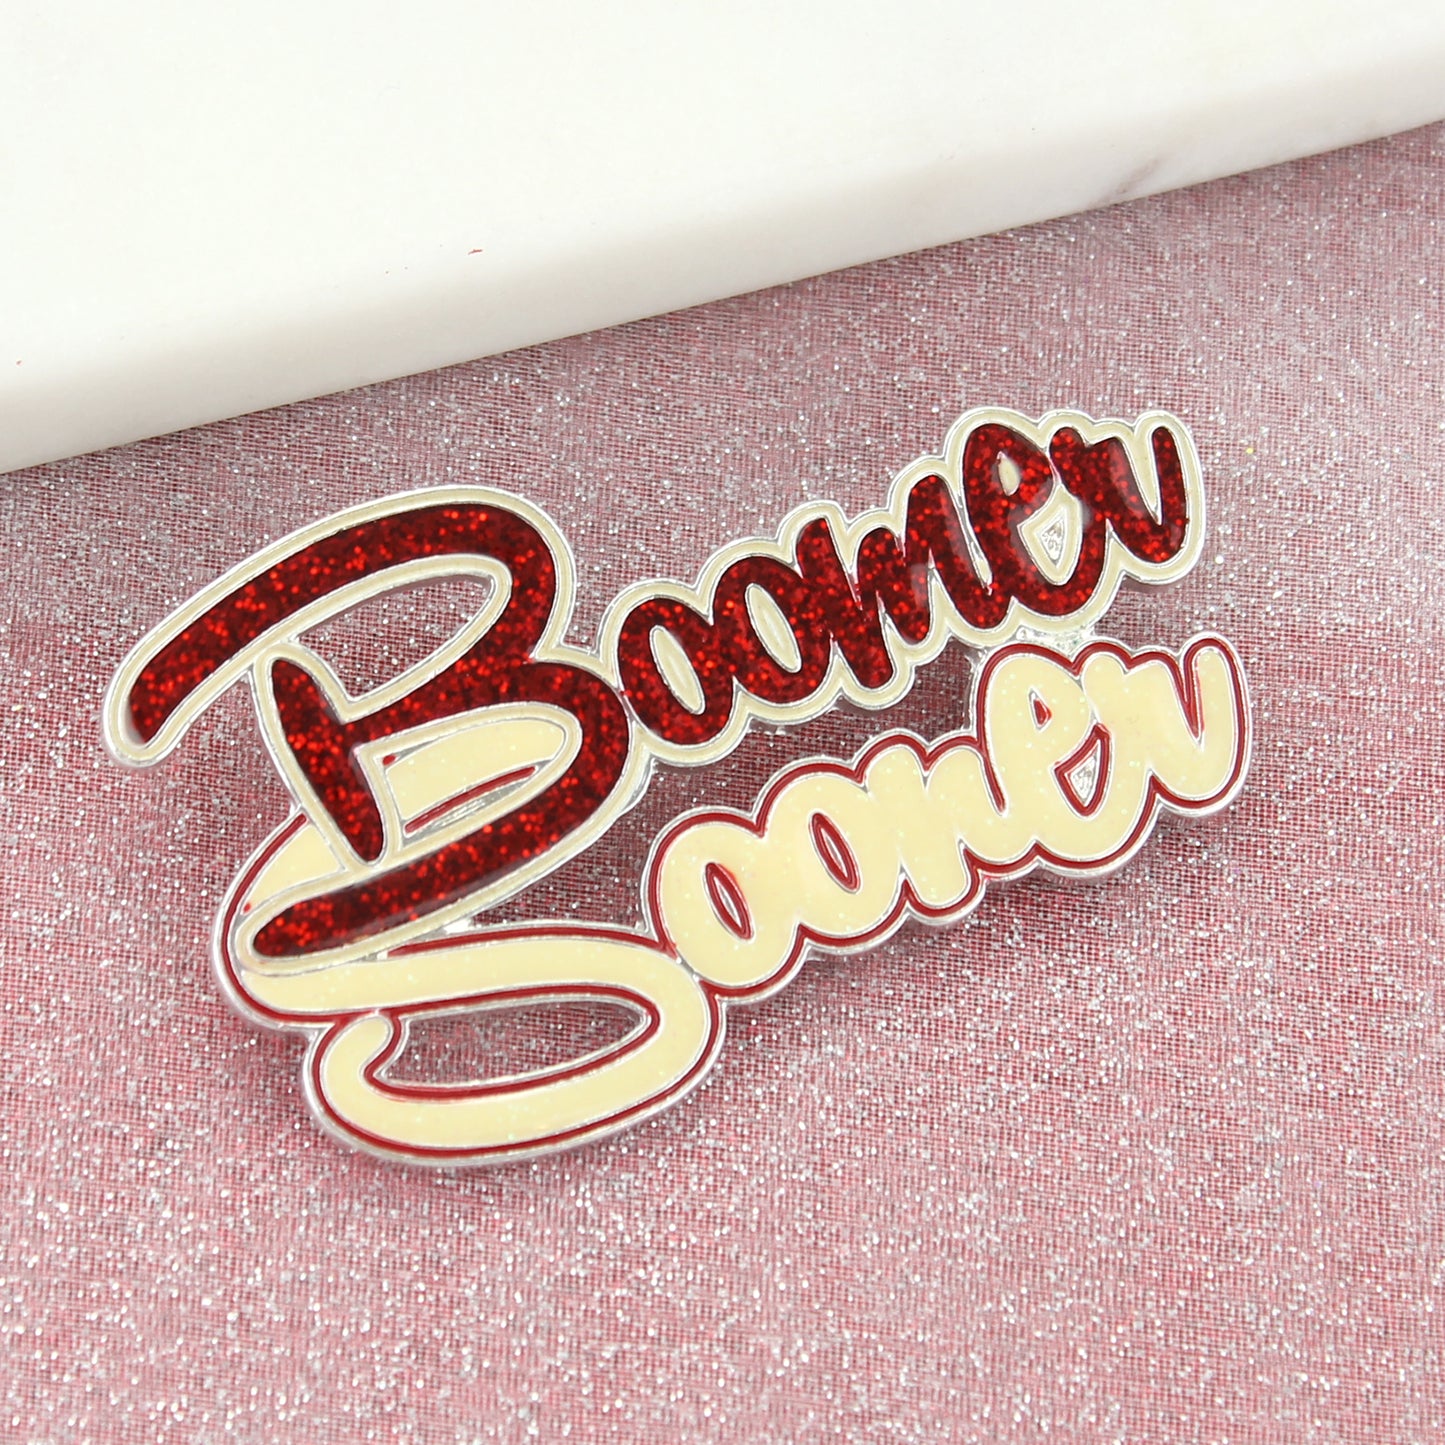 Oklahoma "Boomer Sooner" Slogan Pin - Fan Sparkle